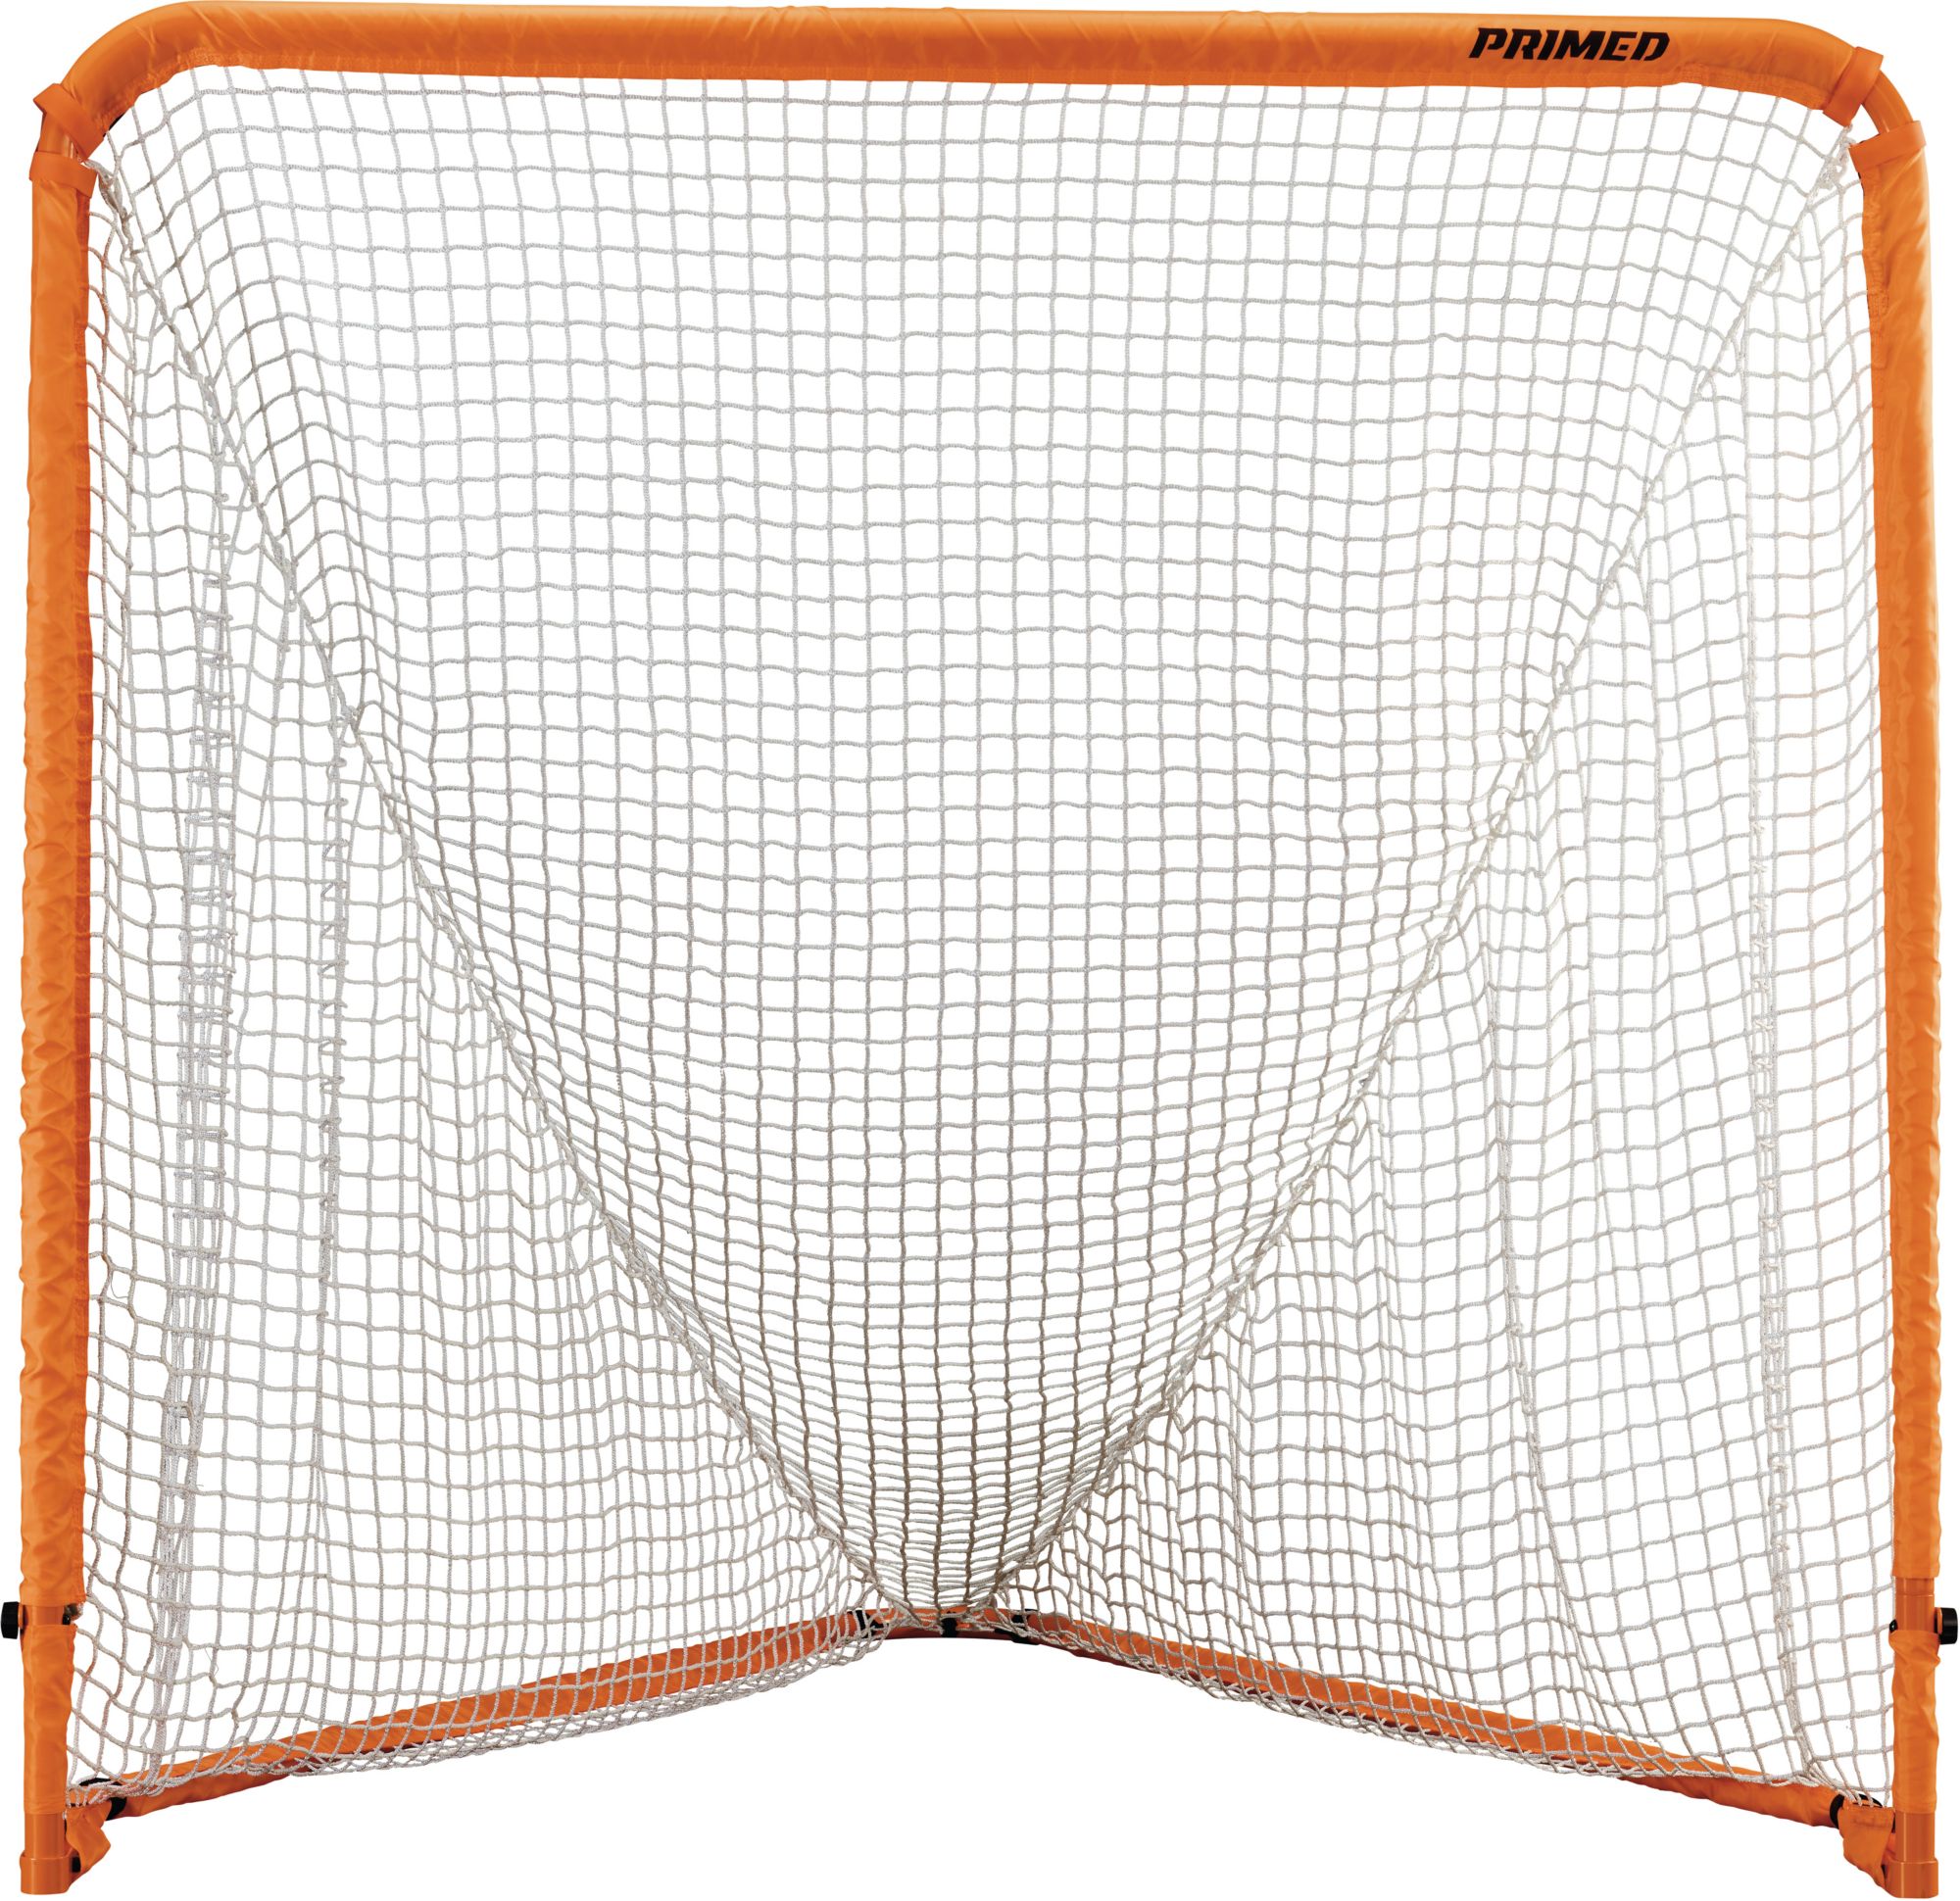 PRIMED 6' x 6' Folding Metal Lacrosse Goal